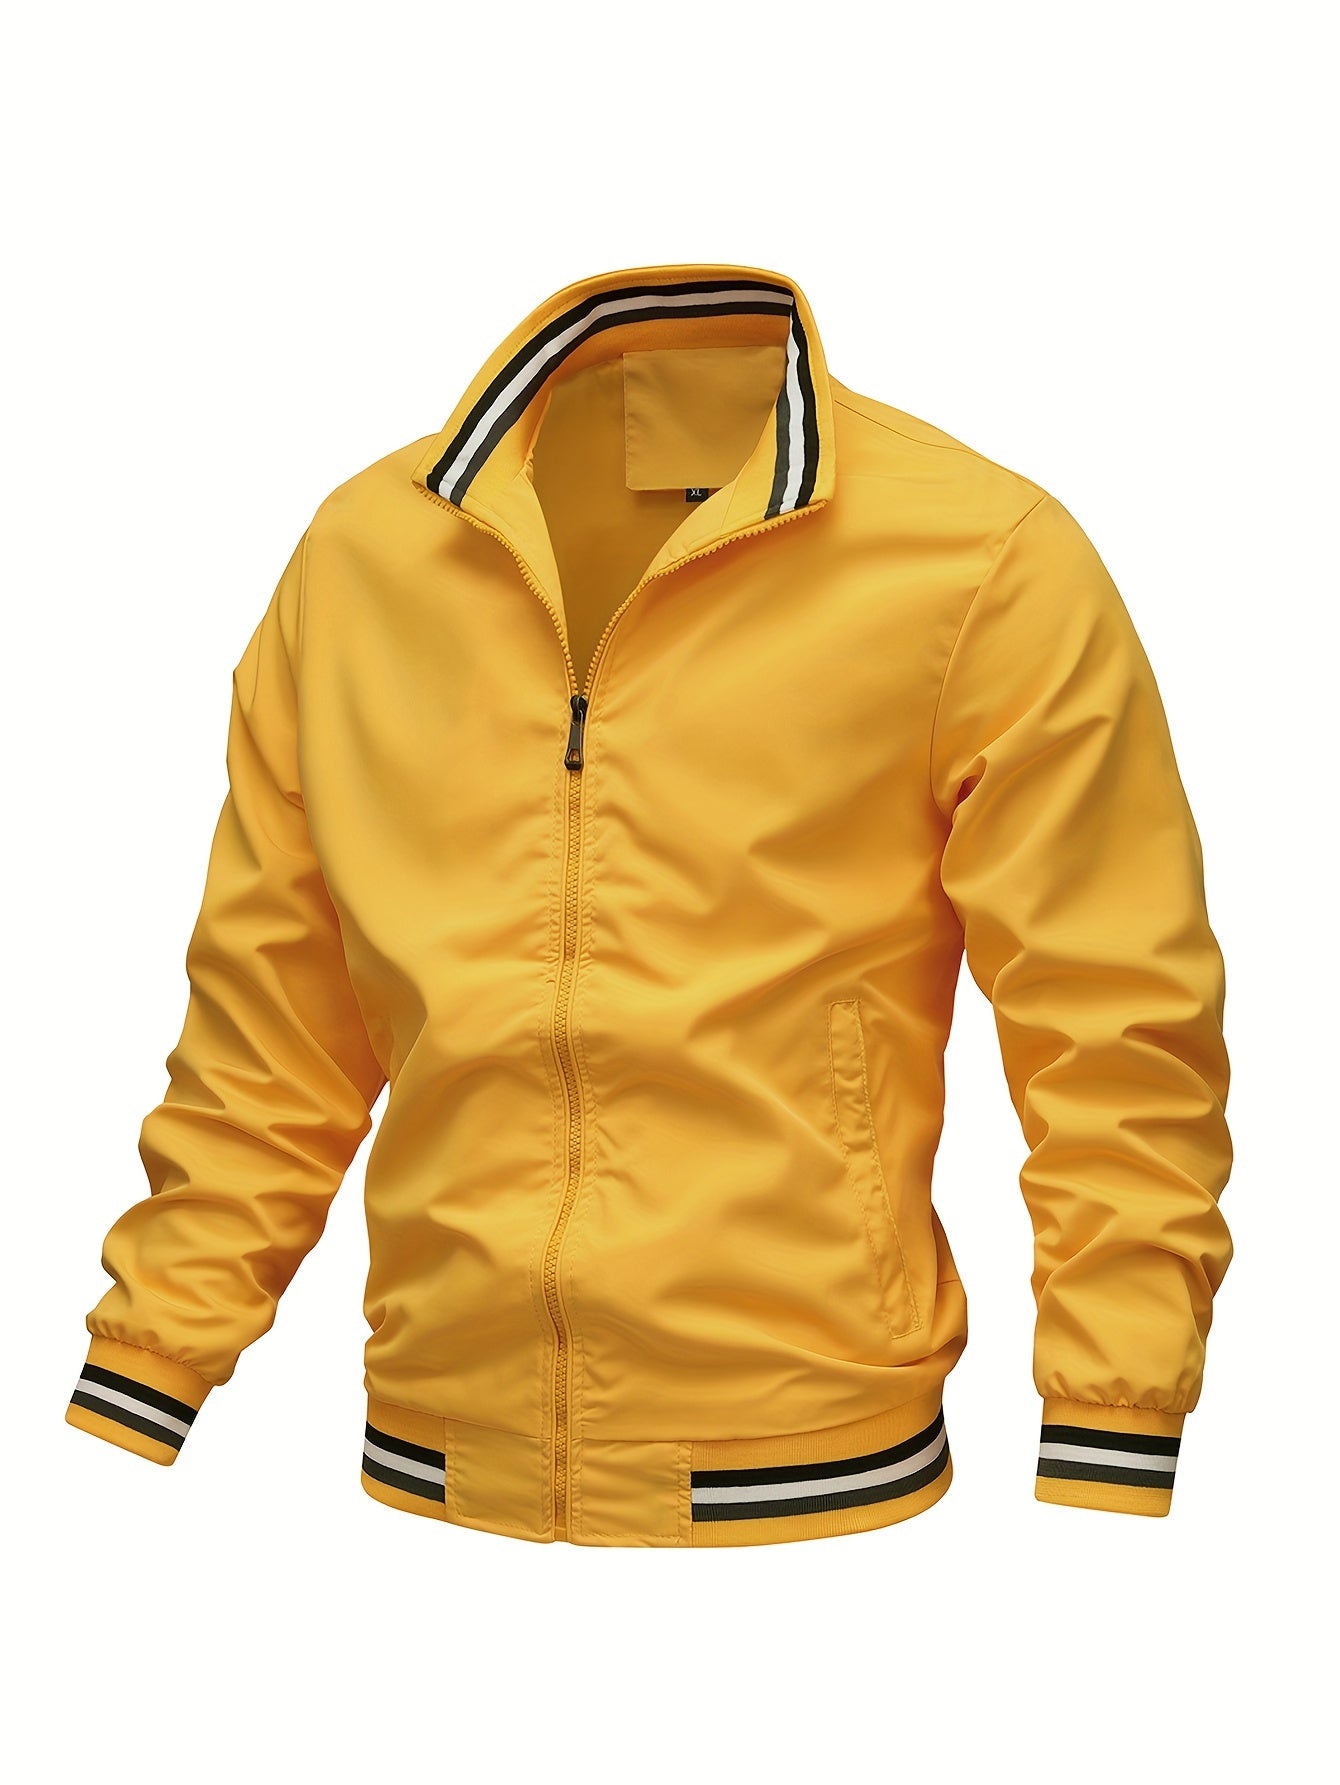 Foruwish - Stripe Edge Bomber Jacket, Men's Casual Stand Collar Zip Up Jacket For Spring Summer Outdoor